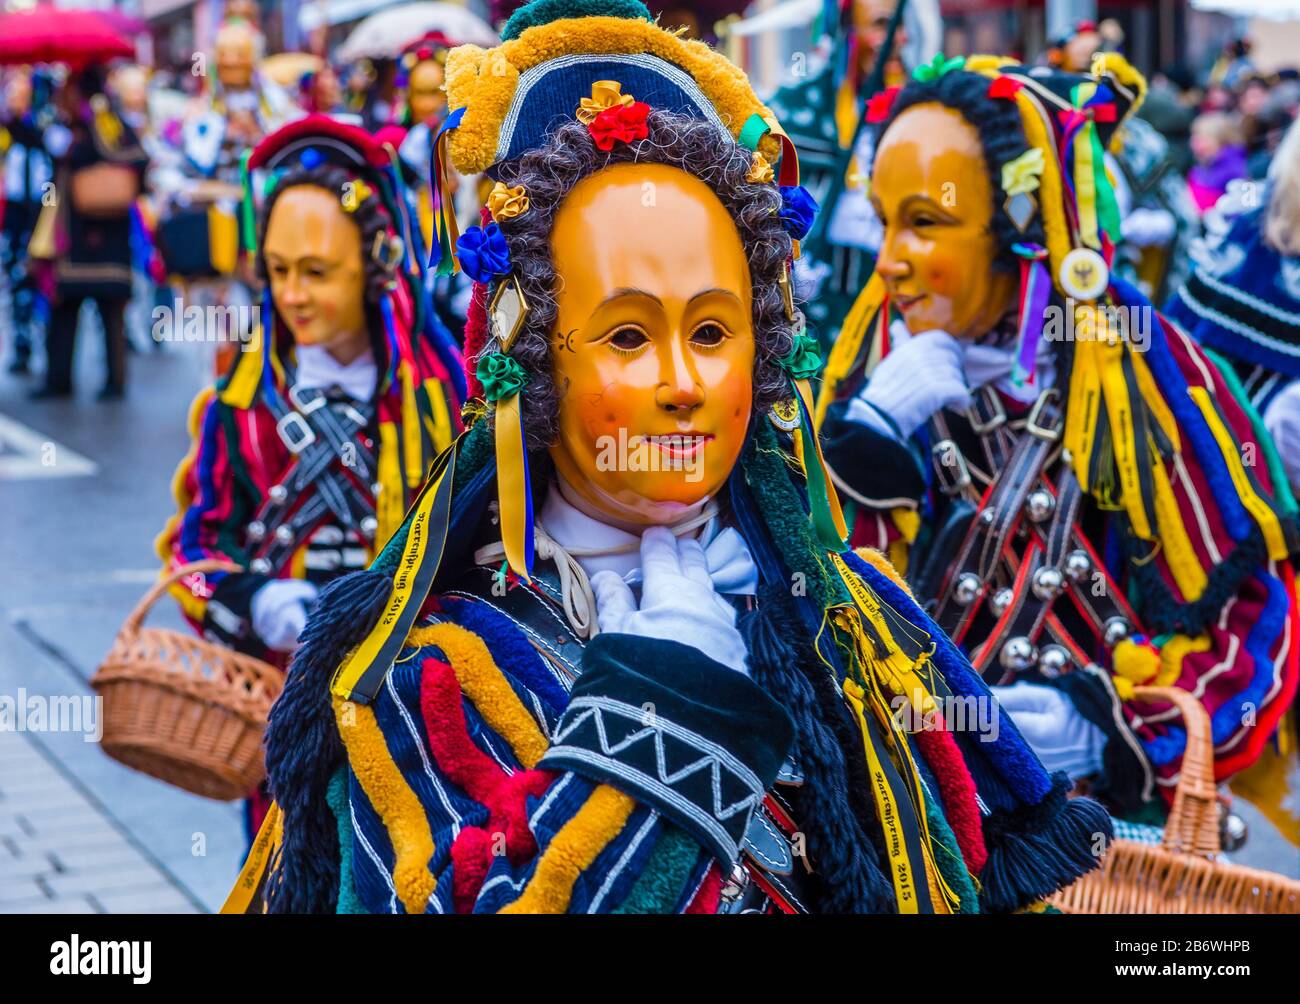 Partecipanti al Carnevale di Rottweil in Rottweil , Germania Foto Stock